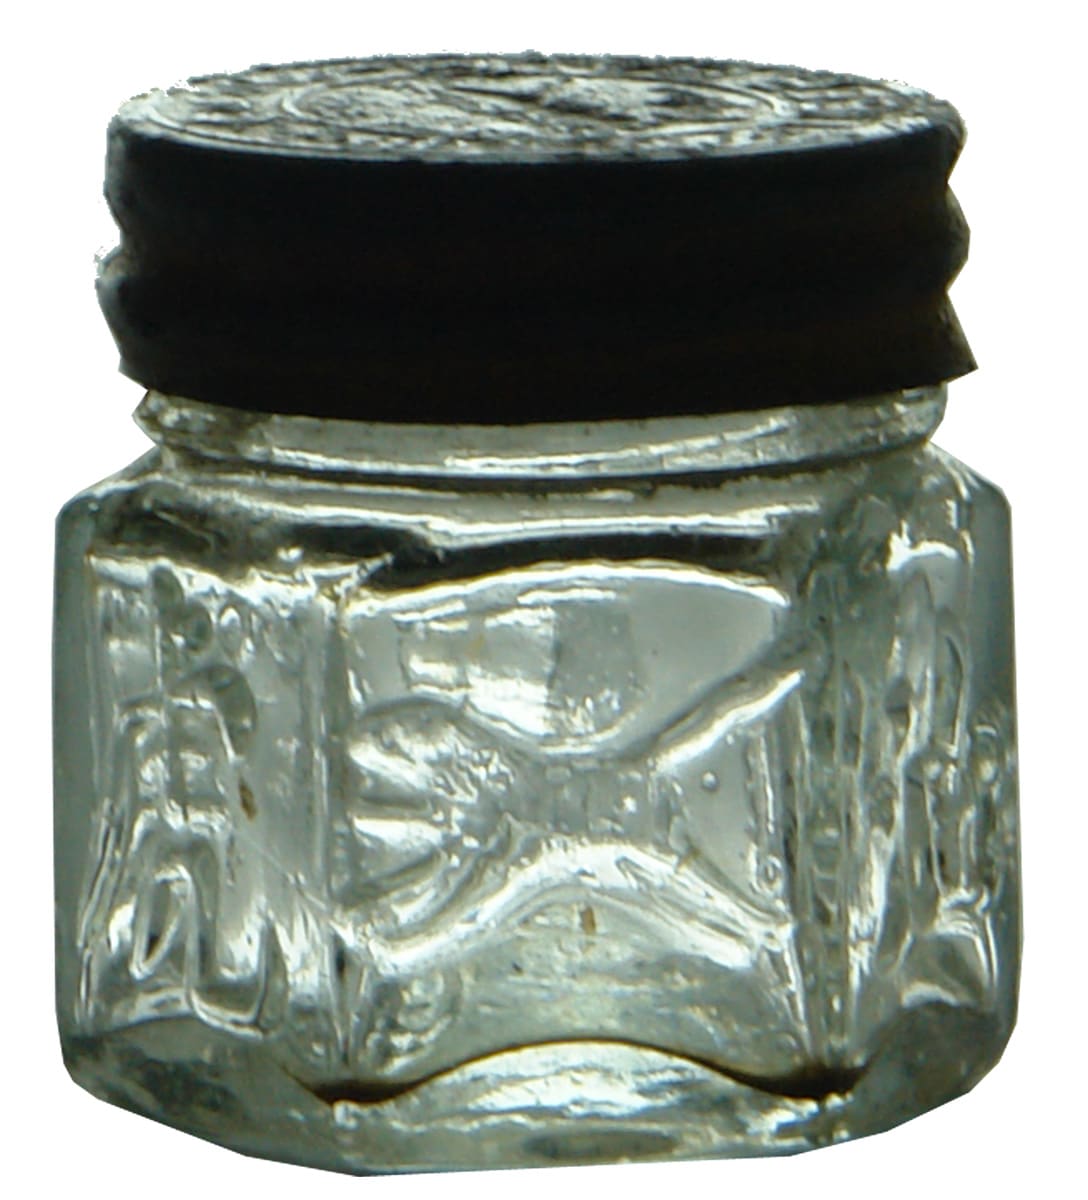 Tiger Balm Vintage Glass Jar